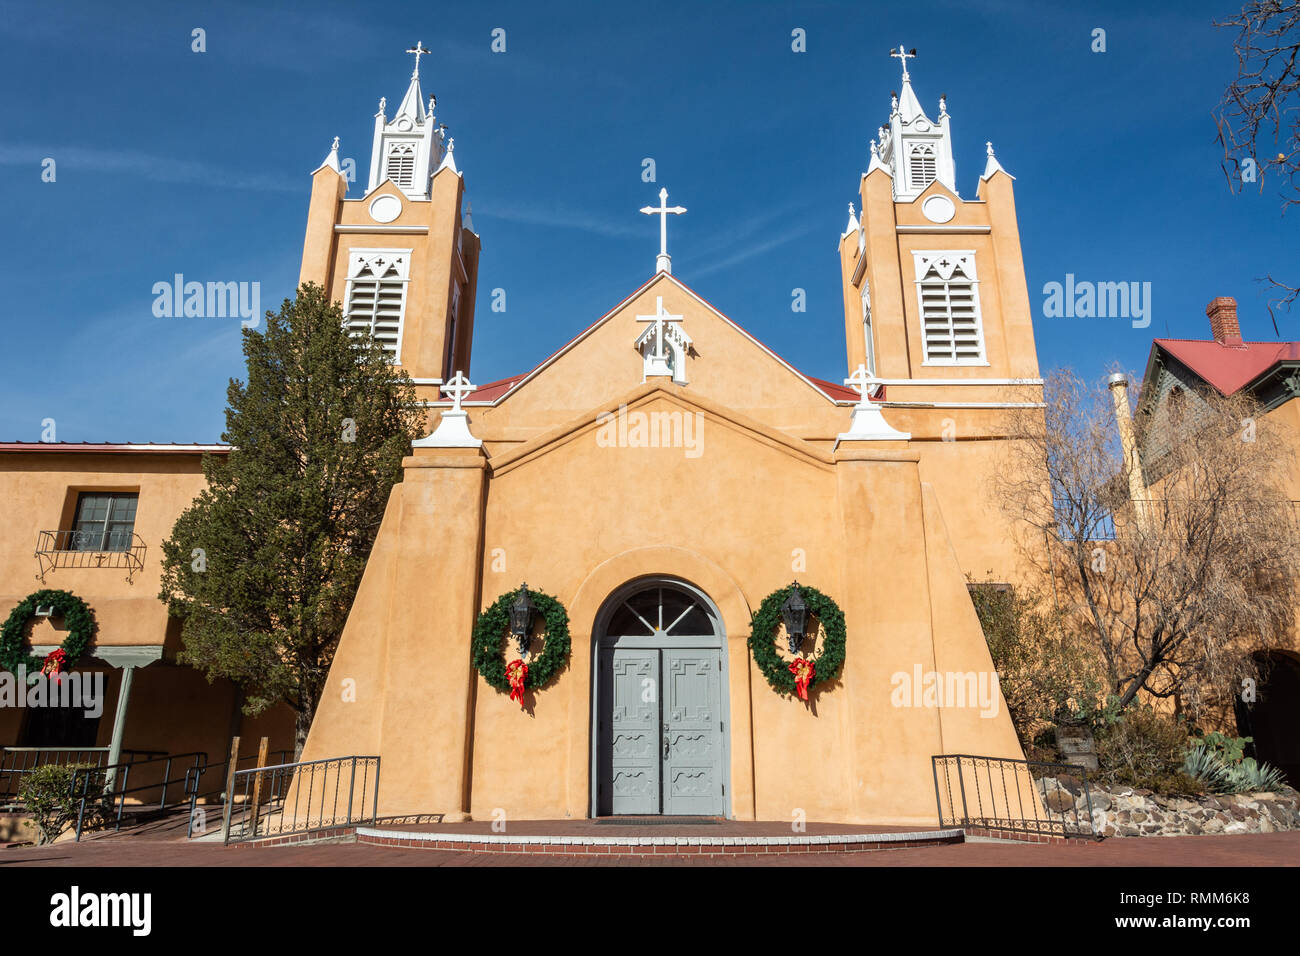 Albuquerque, New Mexico, United States of America - January 3, 2017. Exterior view of San Felipe de Neri Church, dating from 1793, in Albuquerque, NM. Stock Photo